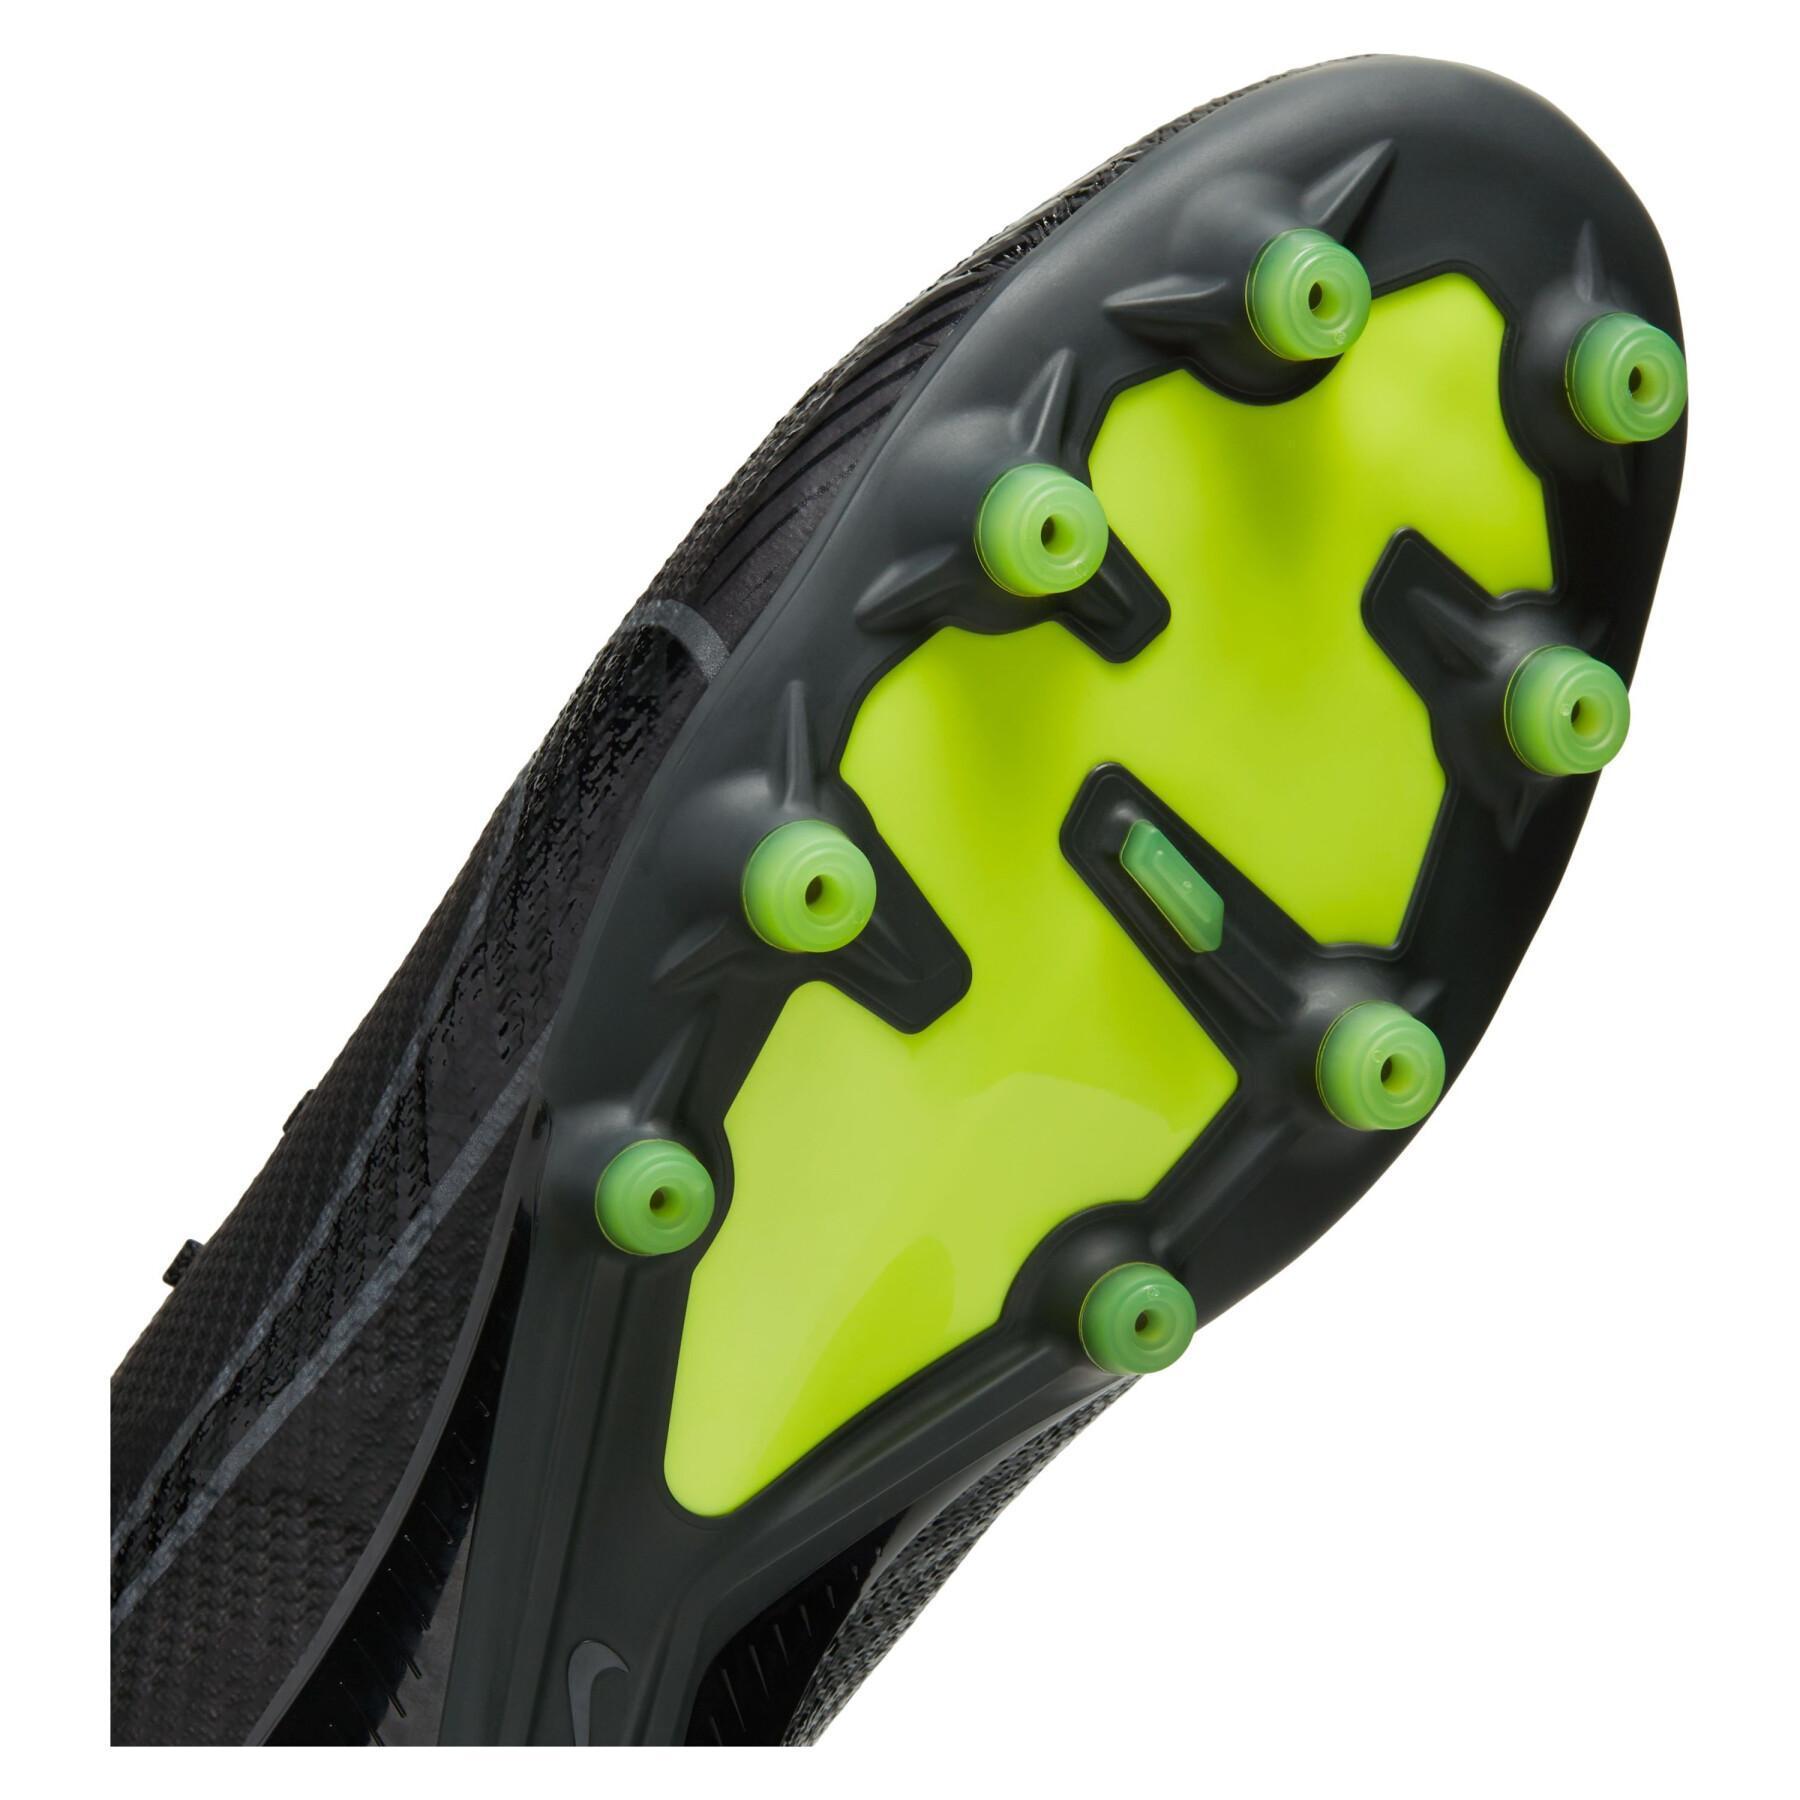 Scarpe da calcio Nike Zoom Mercurial Superfly 9 Pro AG-Pro - Shadow Black Pack